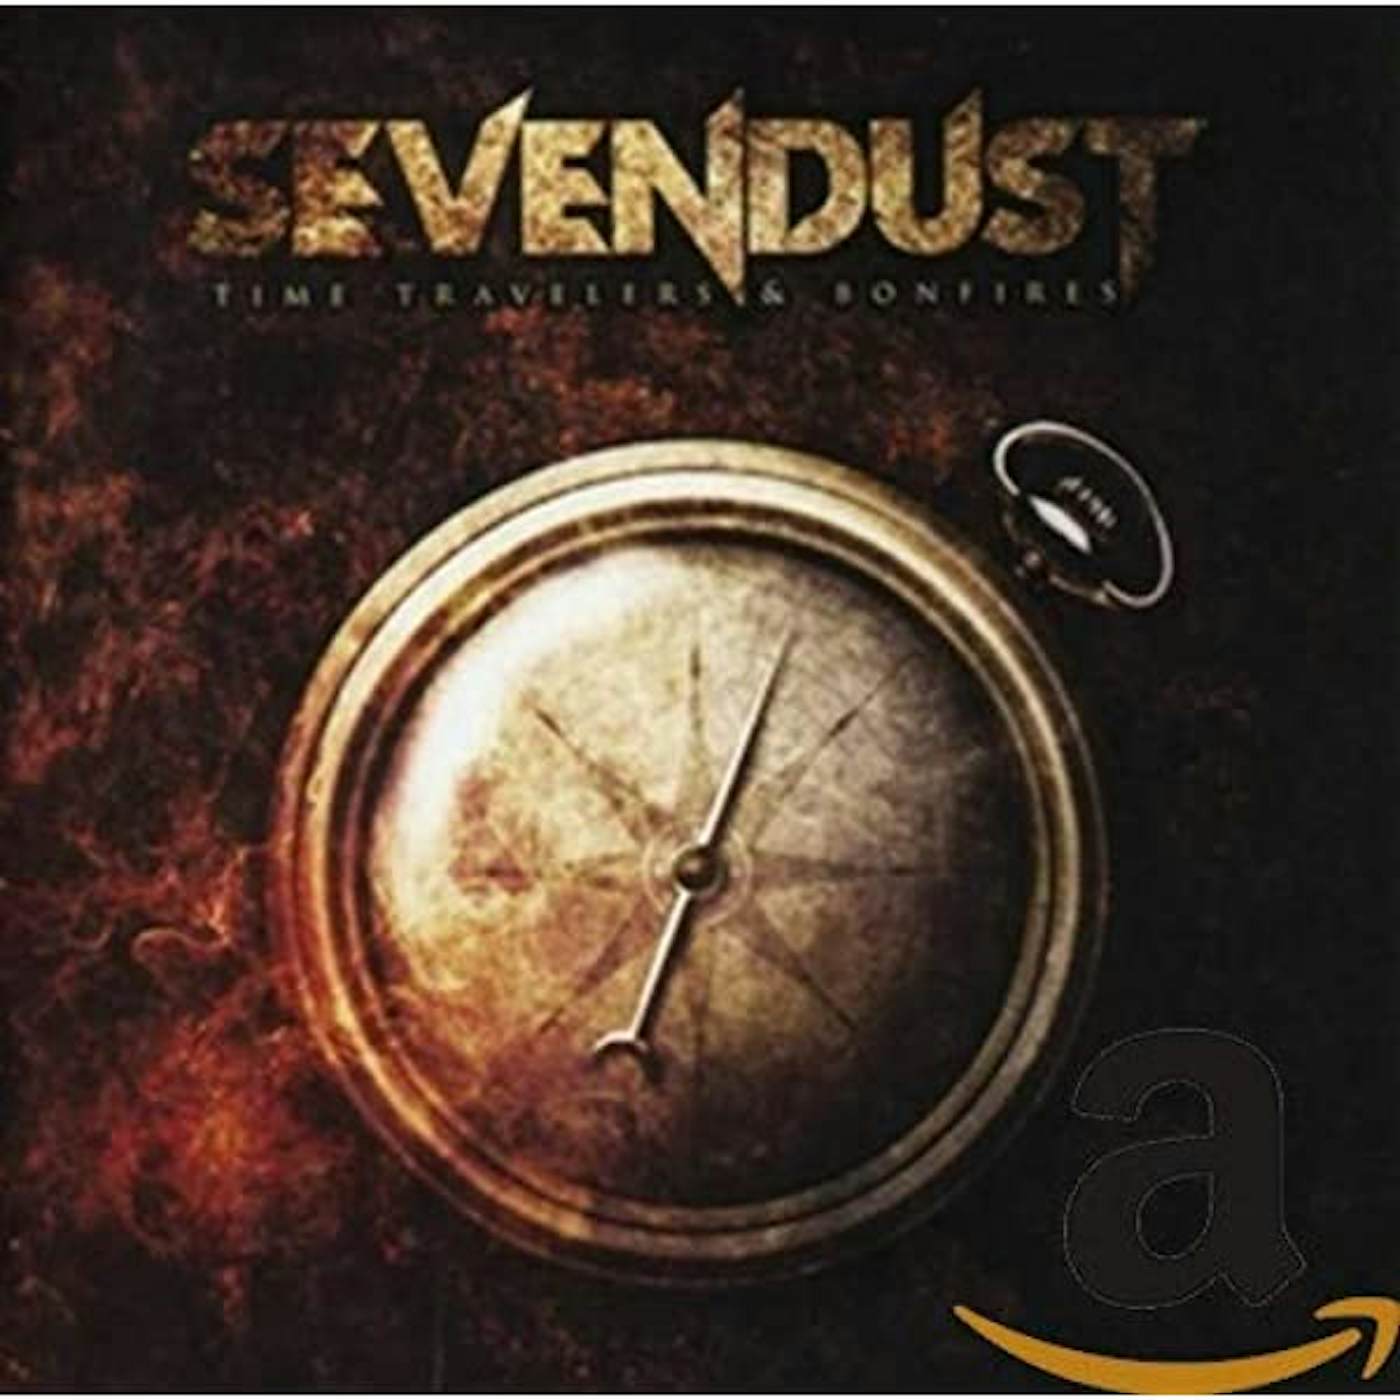 Sevendust Time Travelers & Bonfires Vinyl Record